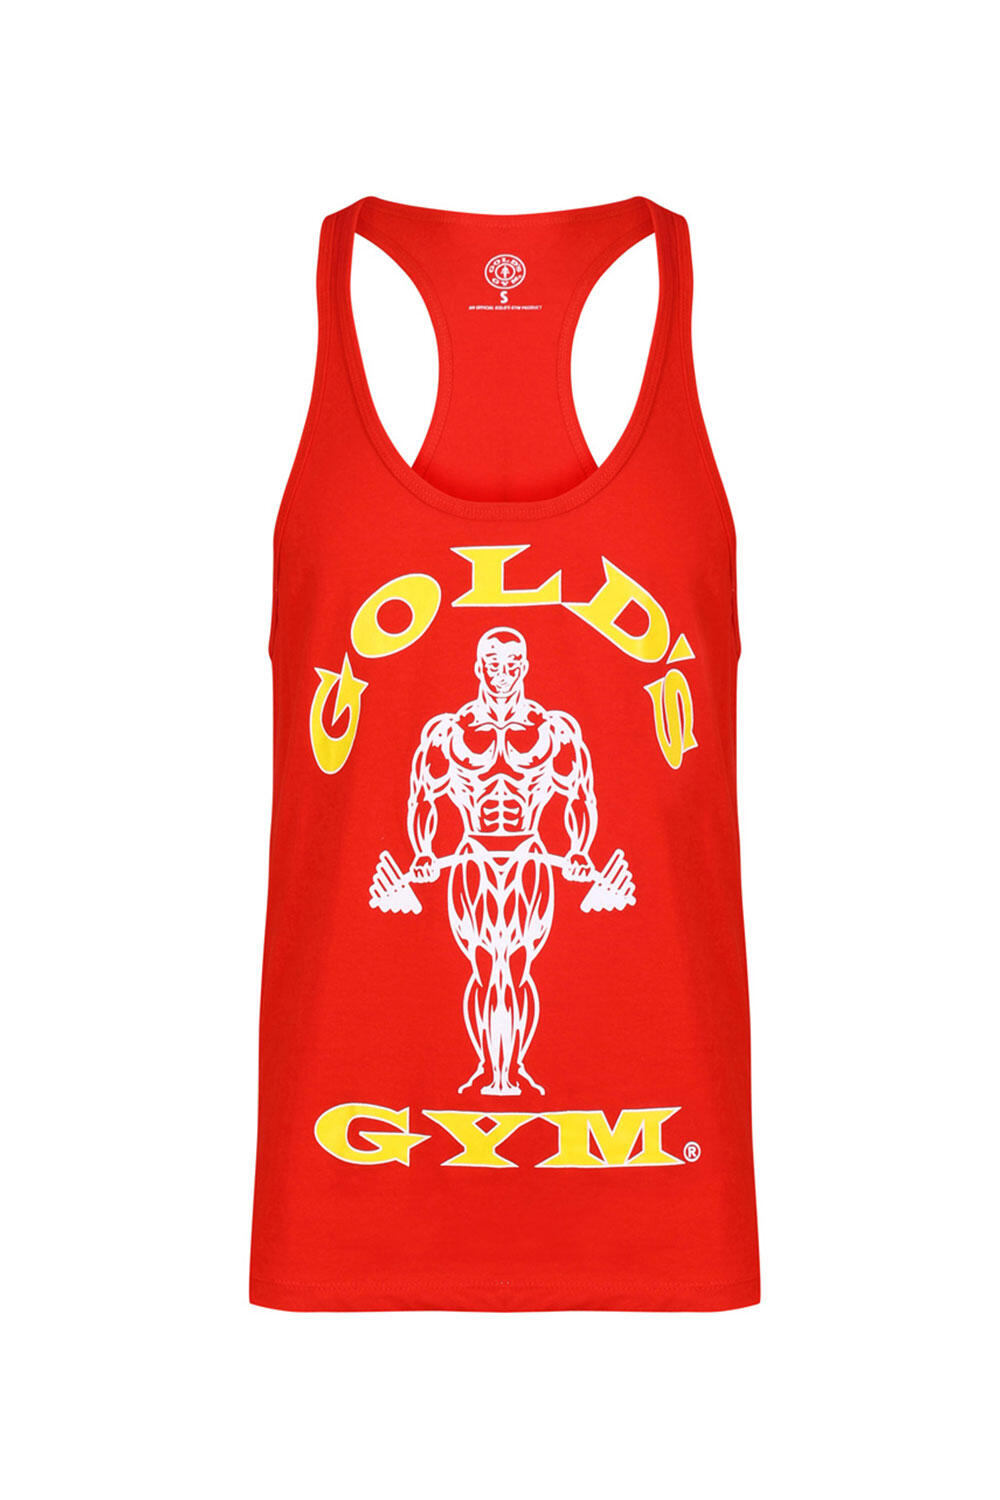 Men's Gold's Gym Muscle Joe Print Premium Stringer Vest 2/4